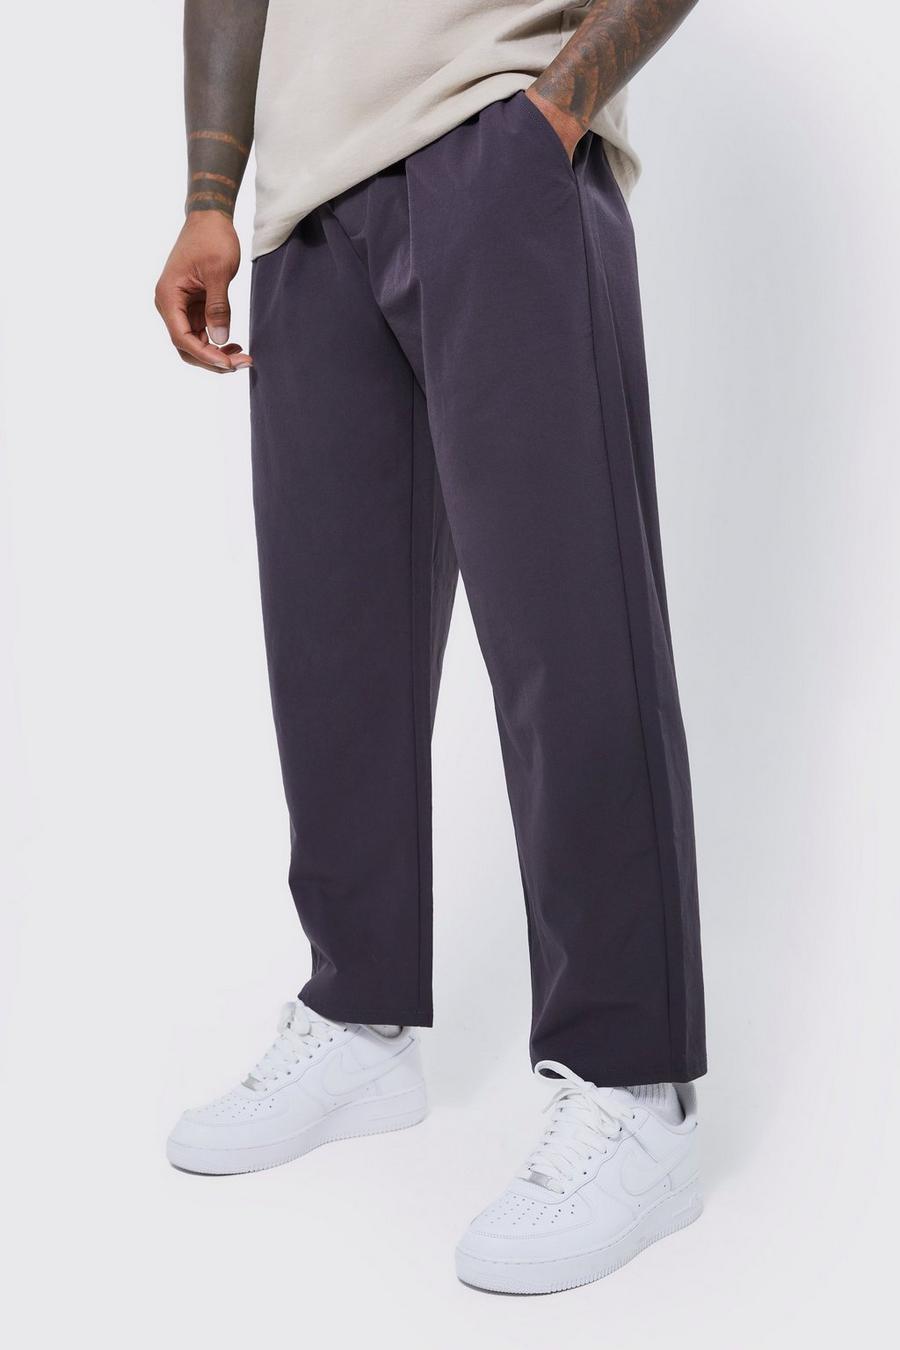 Pantalón técnico elástico holgado ligero, Charcoal image number 1